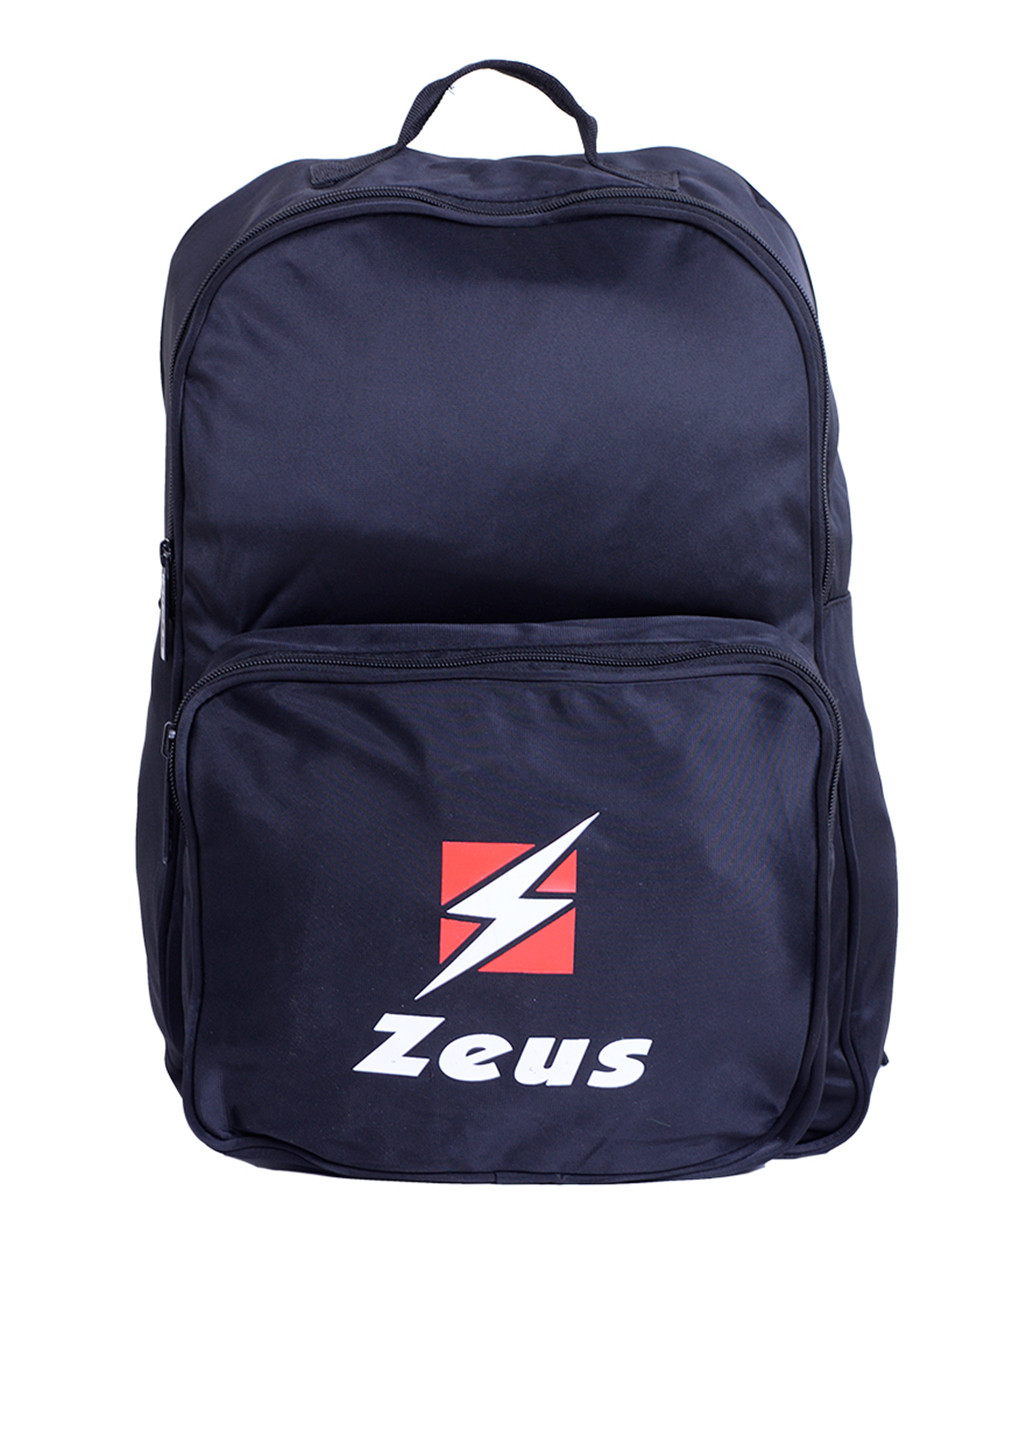 Рюкзак Zeus логотип тёмно-синий спортивный